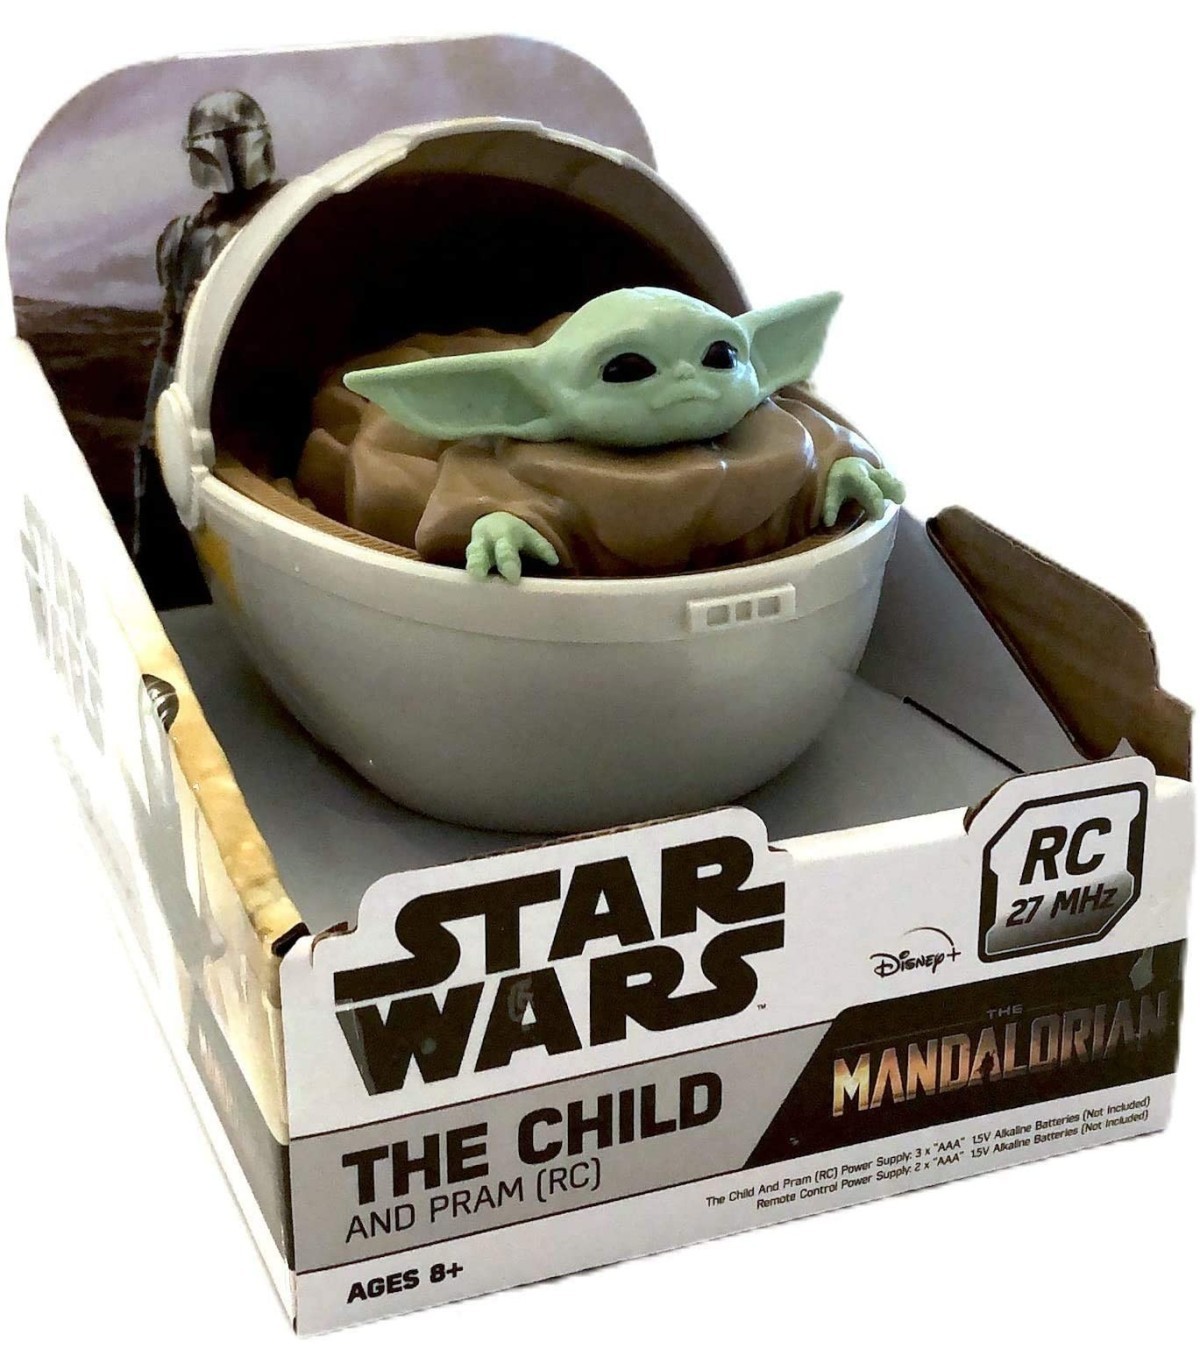 Peluche Animado Baby Yoda The Mandalorian Star Wars con Control Remoto